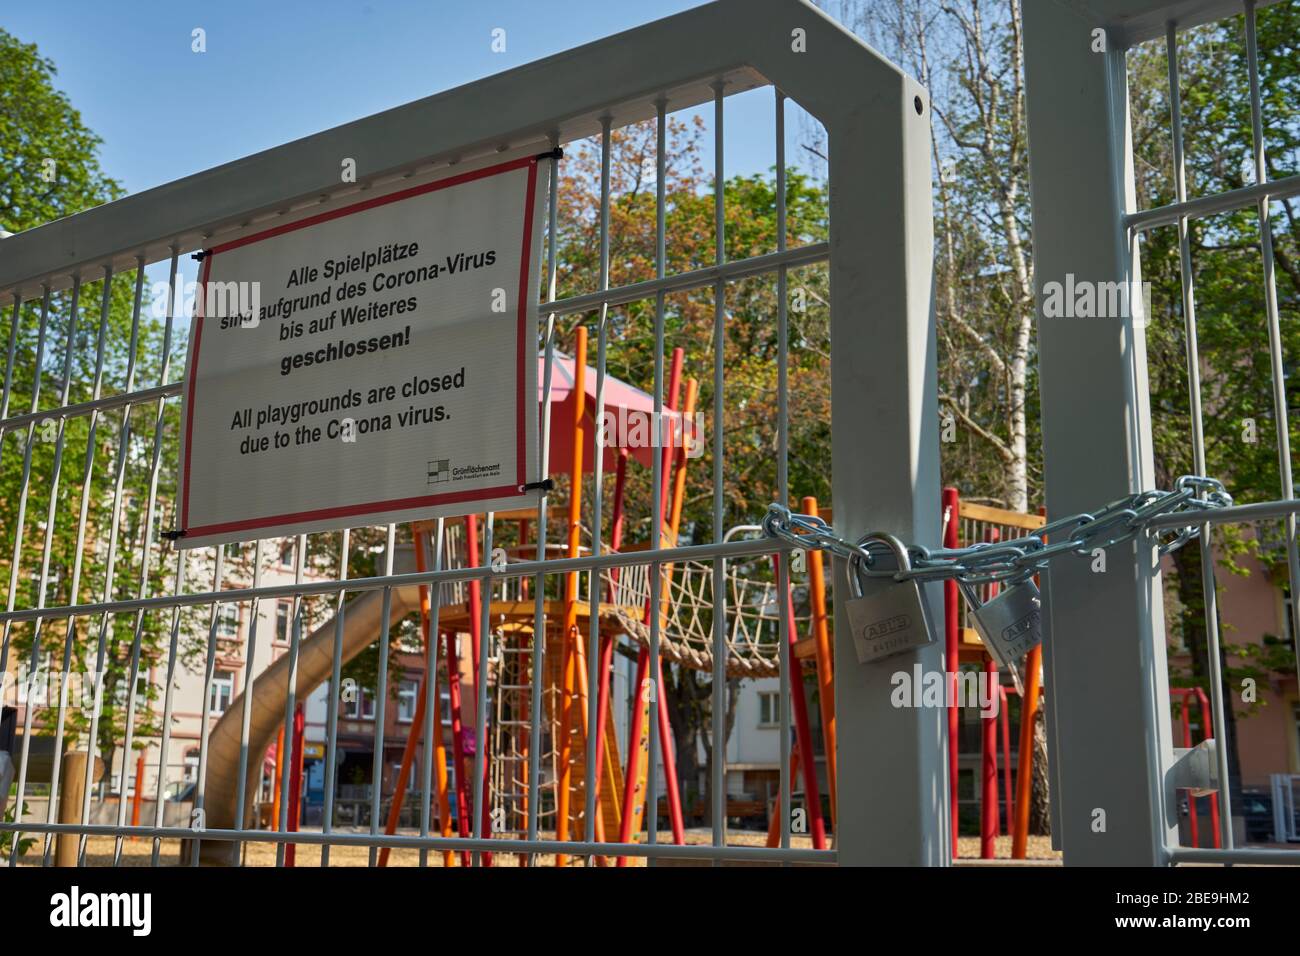 Spielplatz, wegen dem Coronavius geschlossen, Bockenheim, Frankfurt am Main, Deutschland Stock Photo